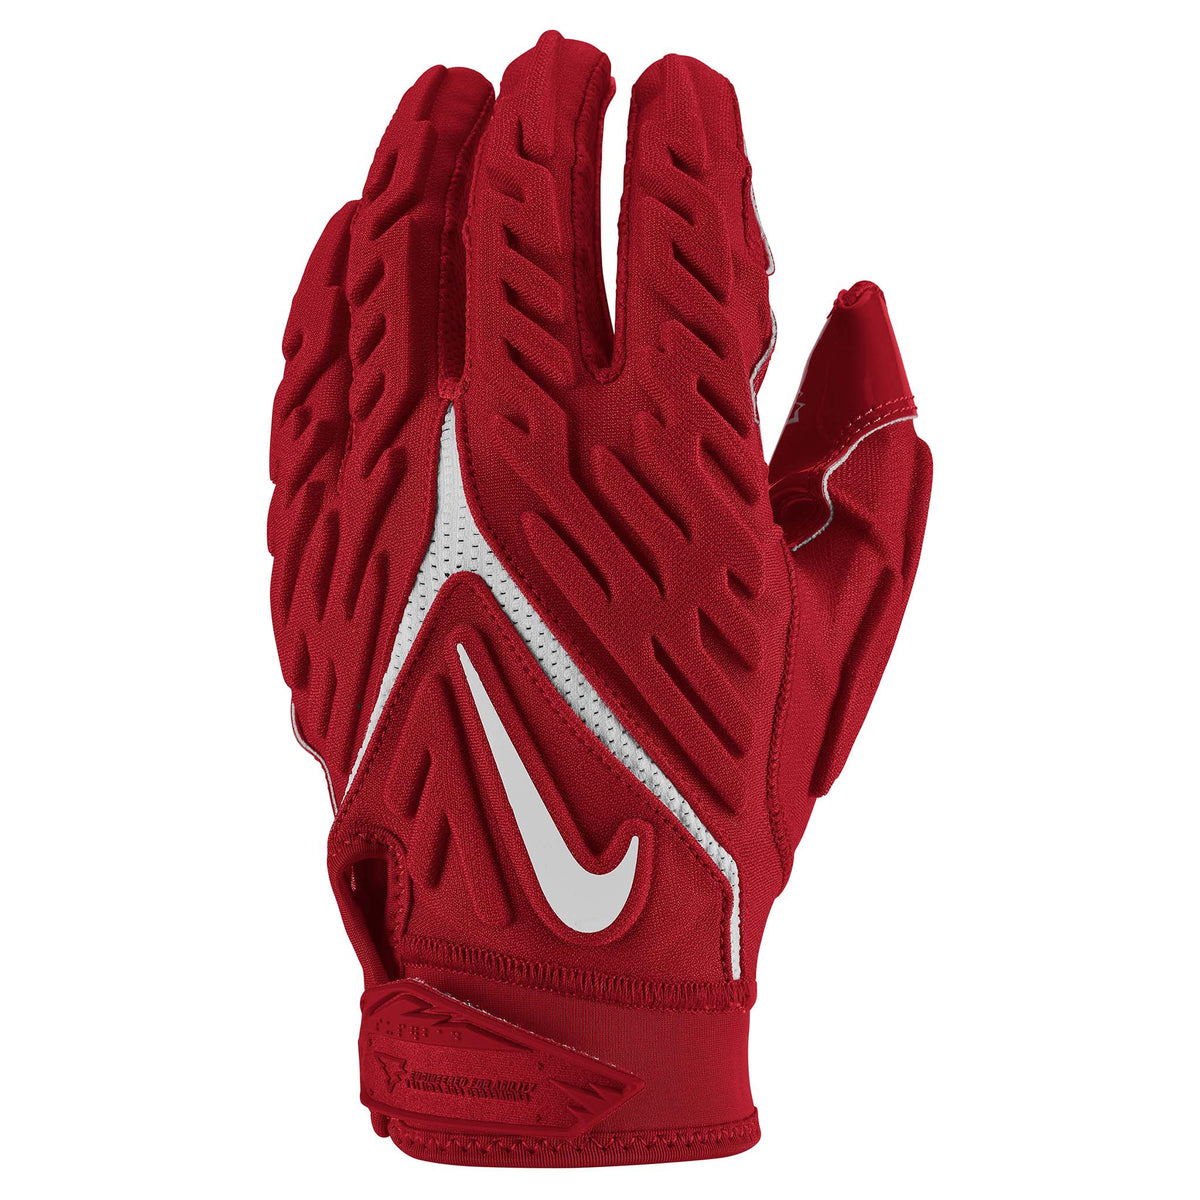 Nike Superbad 6.0 gants de football américain pour adultes - red / university red